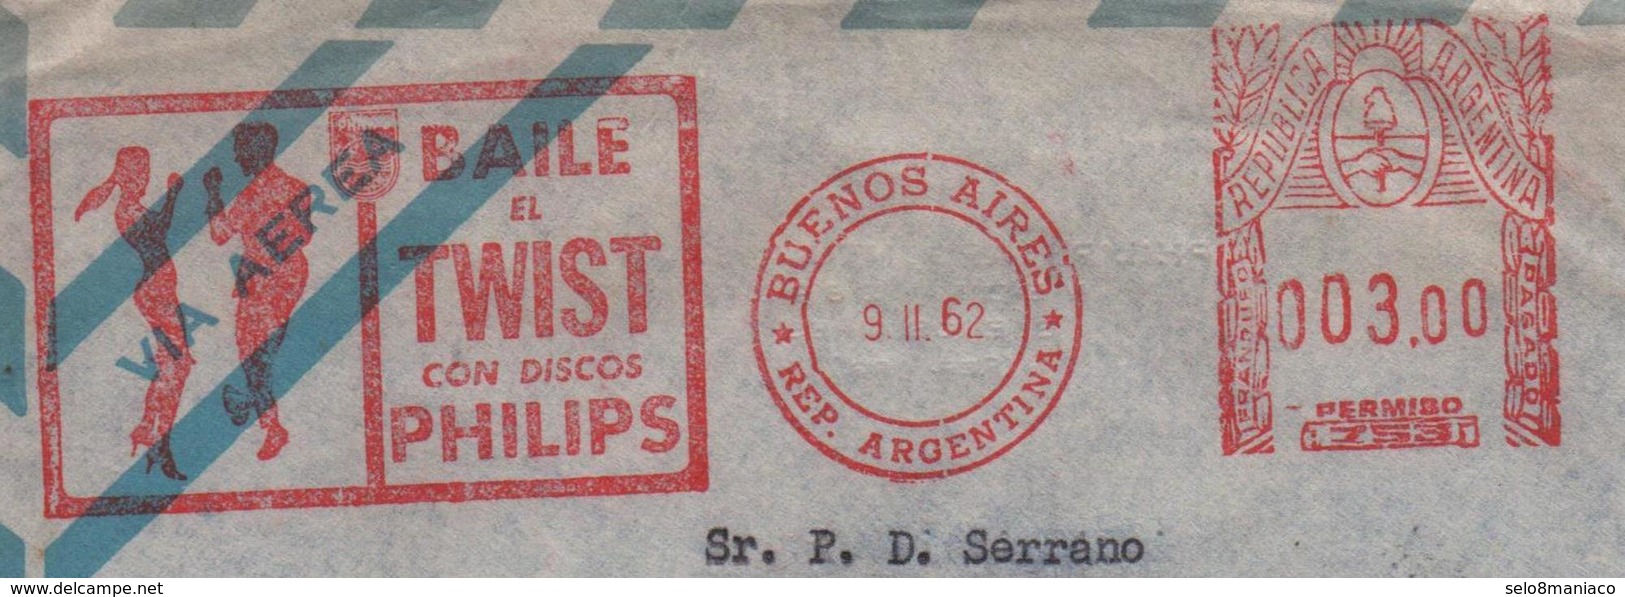 C3445-Argentina-Twist Dance Music Slogan Meter Cover From Bs.As. To Rio, Brazil-1962 - Muziek